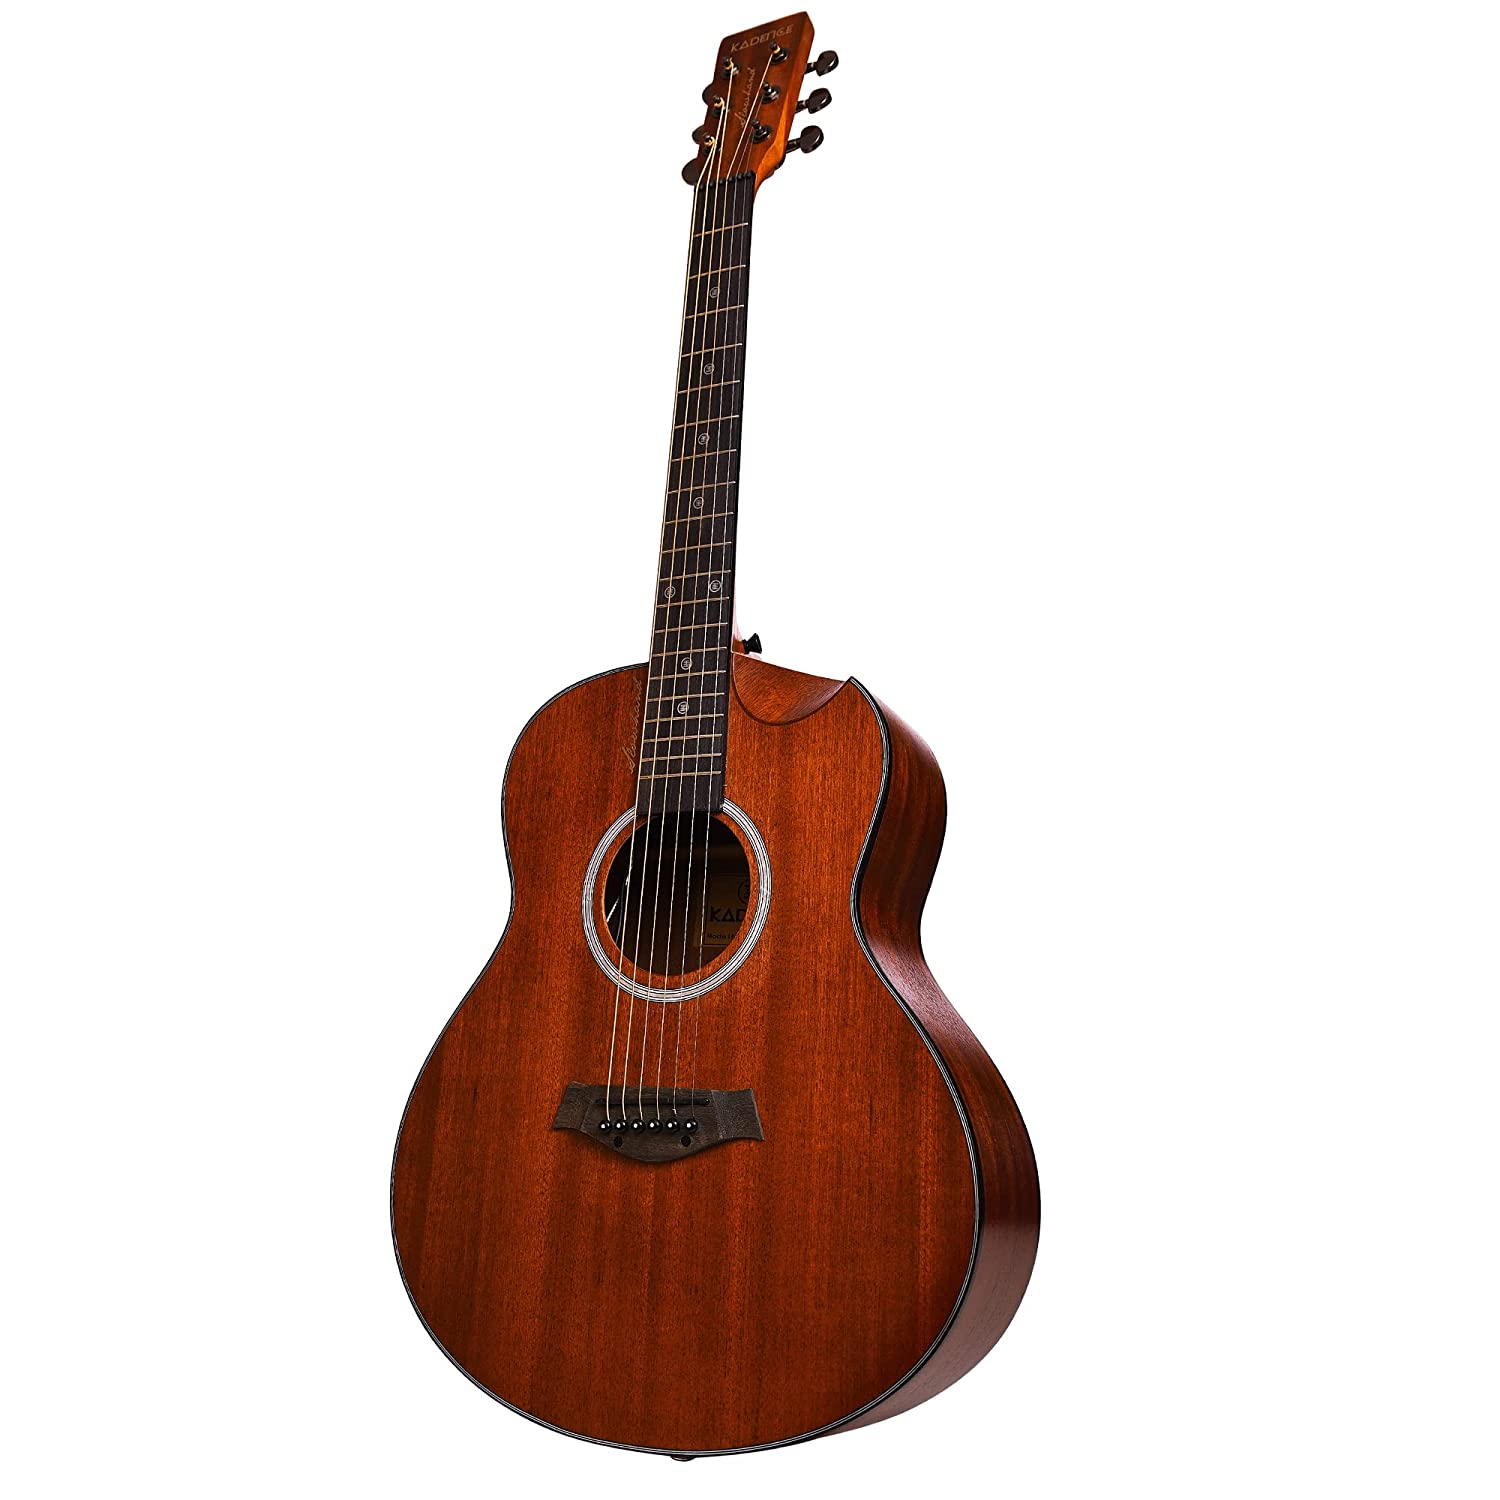 Buy Slowhand 38 Mahogany Guitar - Perfect for Beginners.